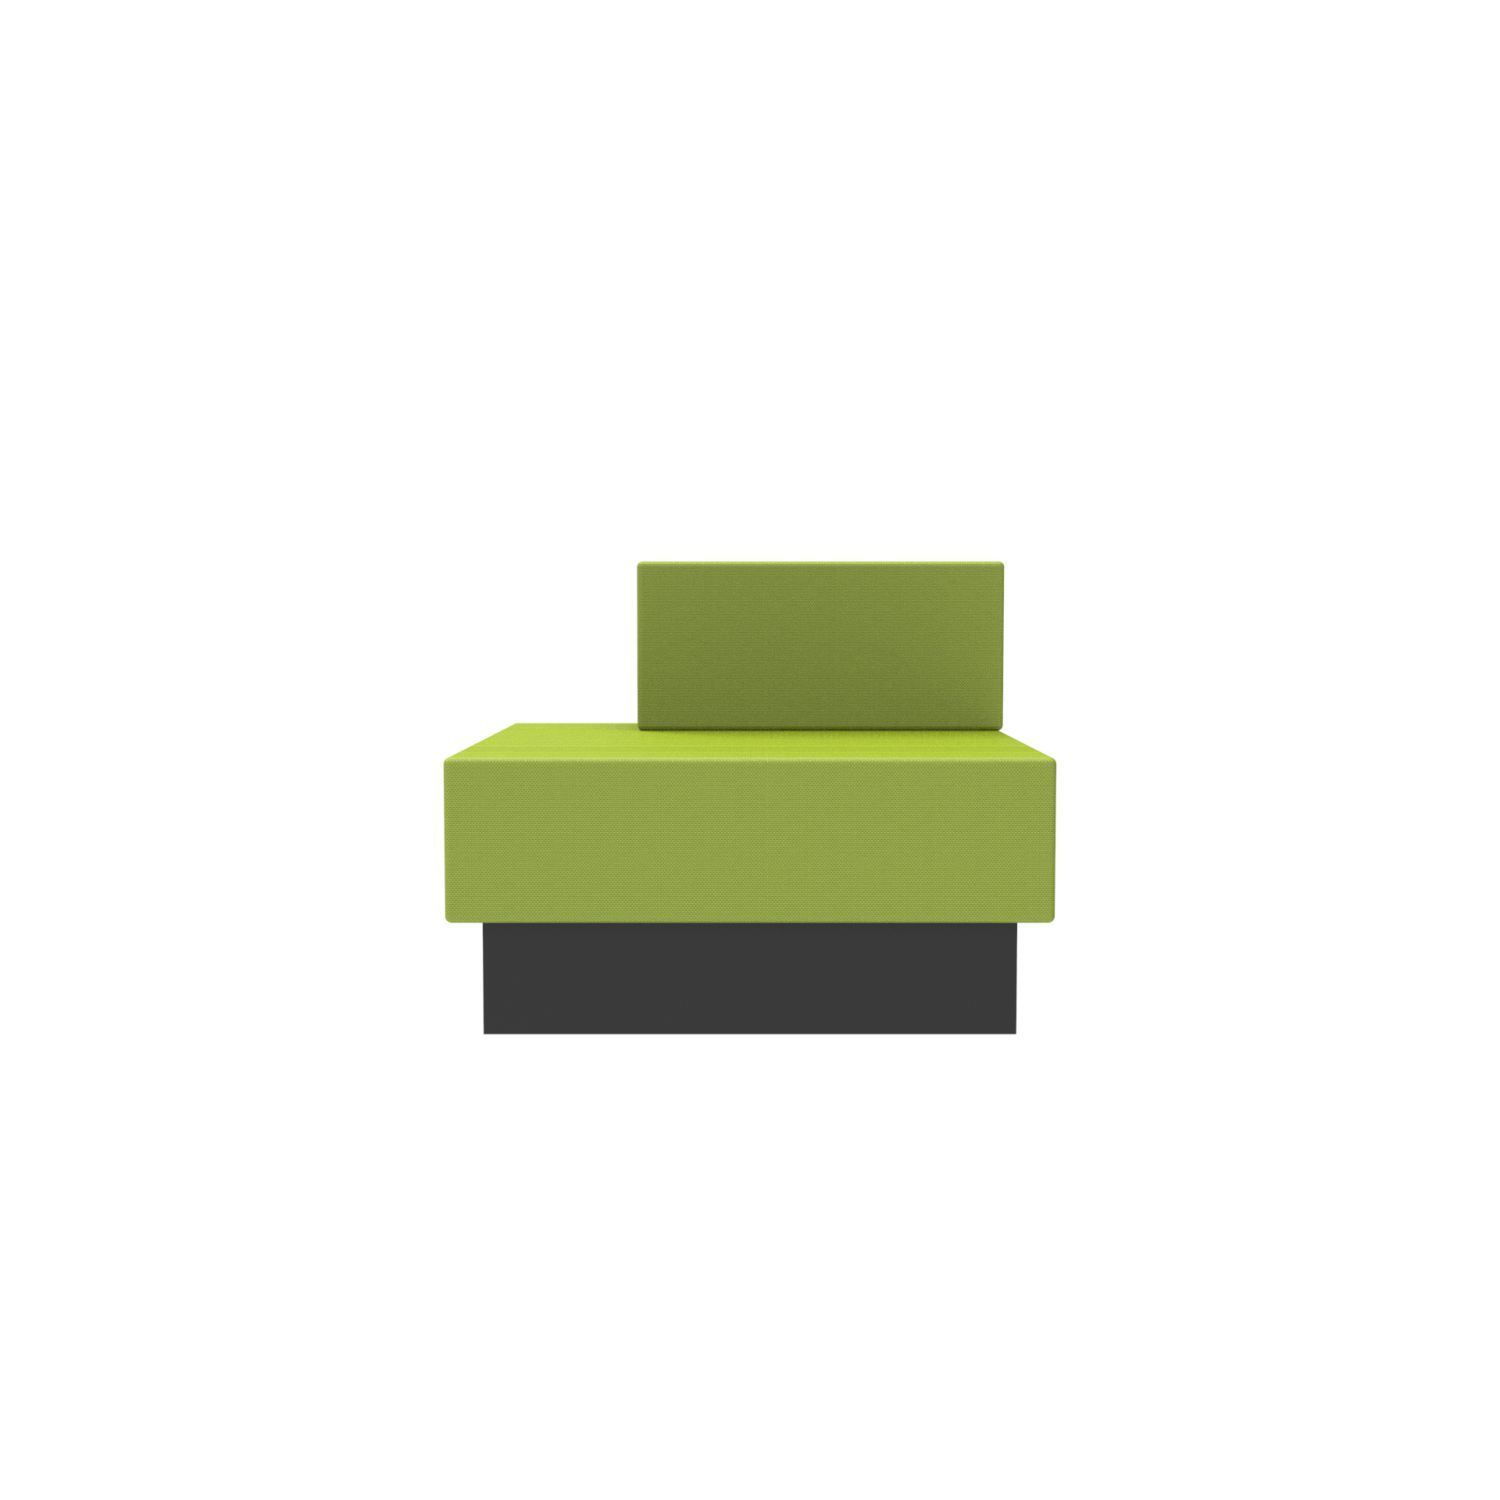 lensvelt oma blocks lounging edition closed base with backrest left 90 cm width fairway green 020 black ral9005 hard leg ends